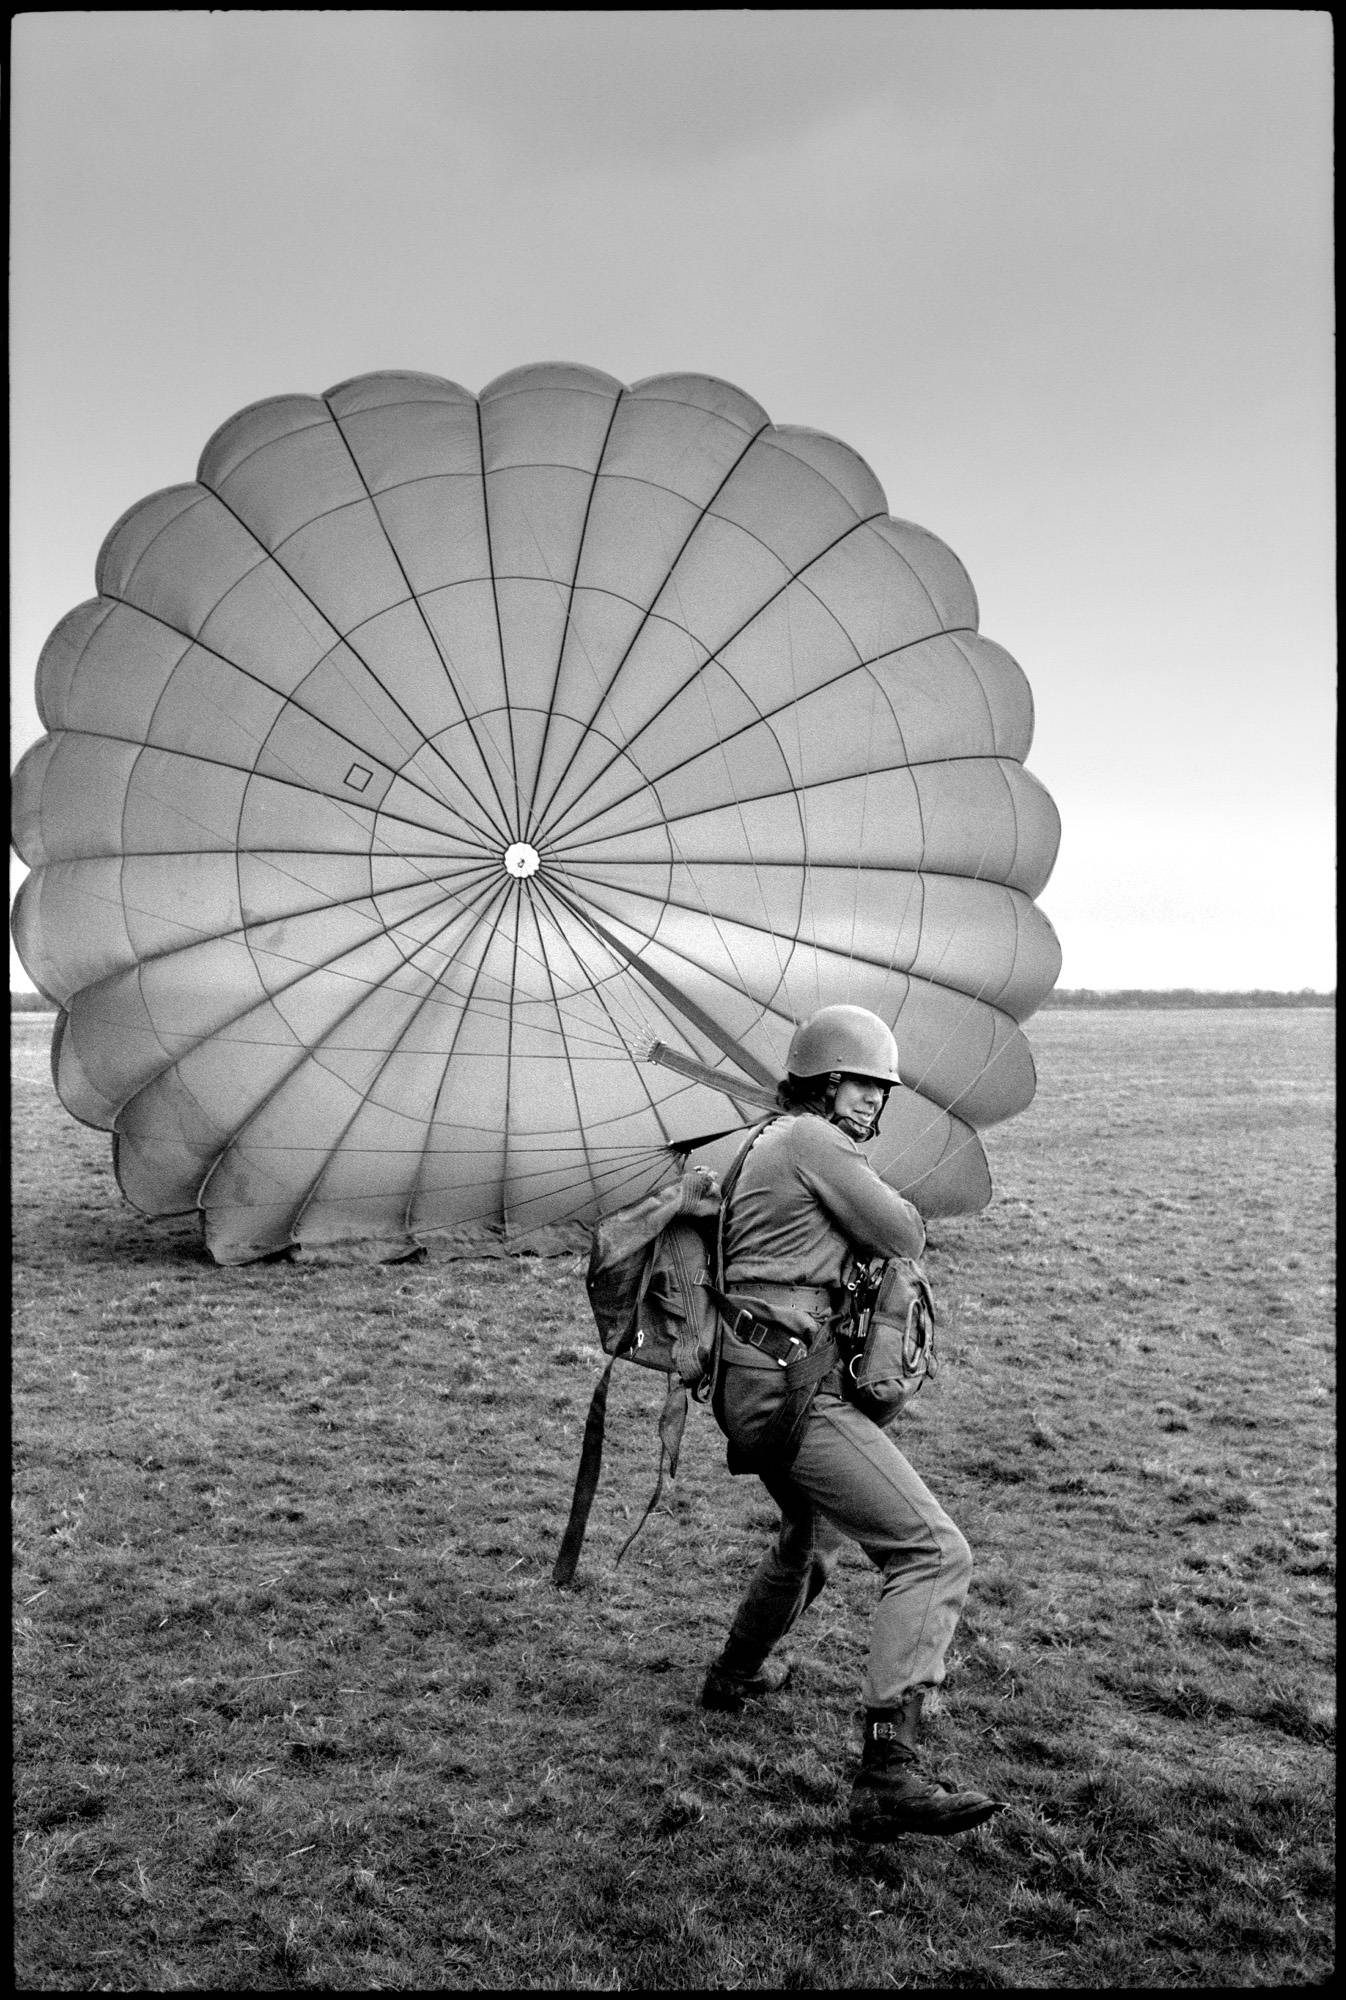 Yann Morvan, "Premier bataillon de femmes parachutistes", 5 mars 1982. © Yann Morvan / Courtesy Edisens 